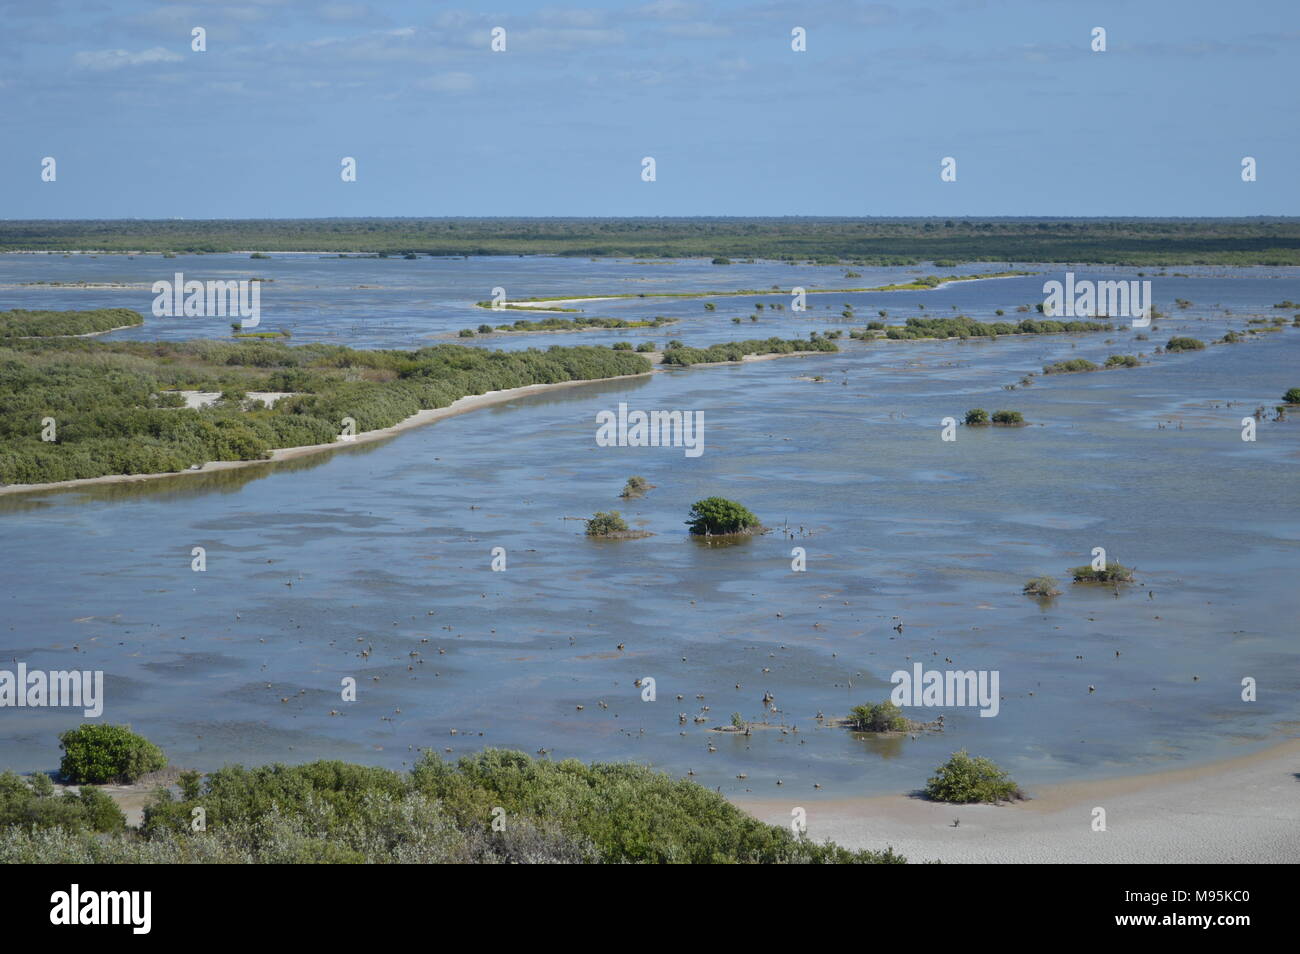 A lagoon at Punta Sur eco park on Cozumel island, Mexico Stock Photo